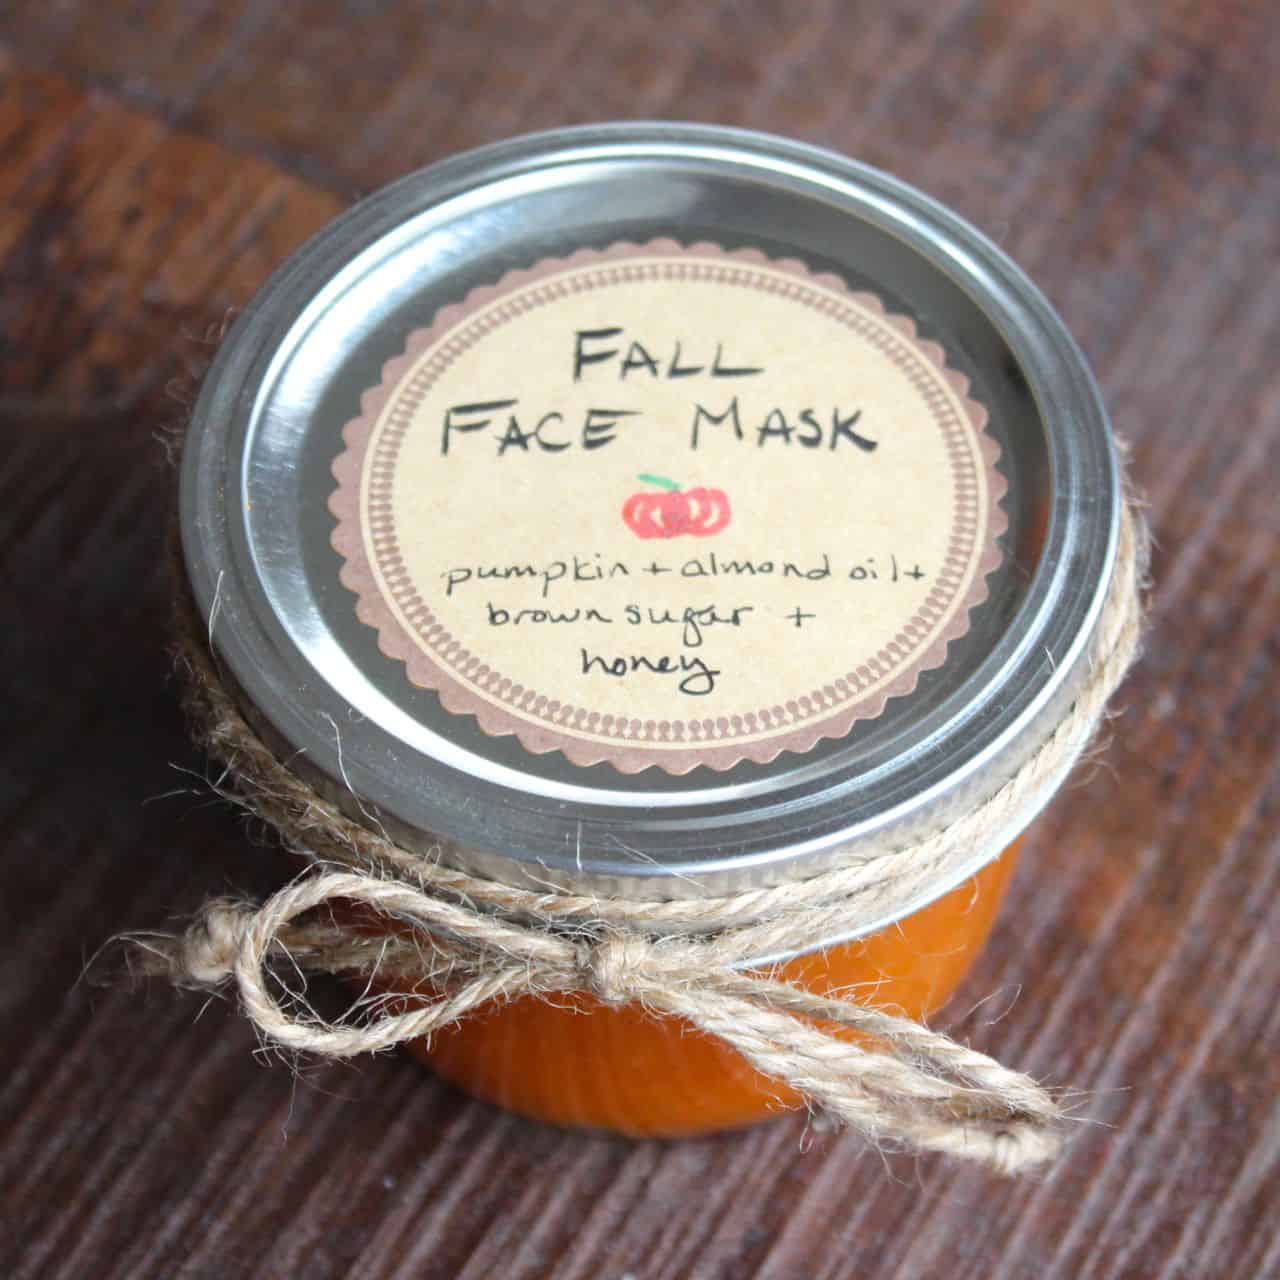 Pumpkin, almond oil, brown sugar, and honey face mask